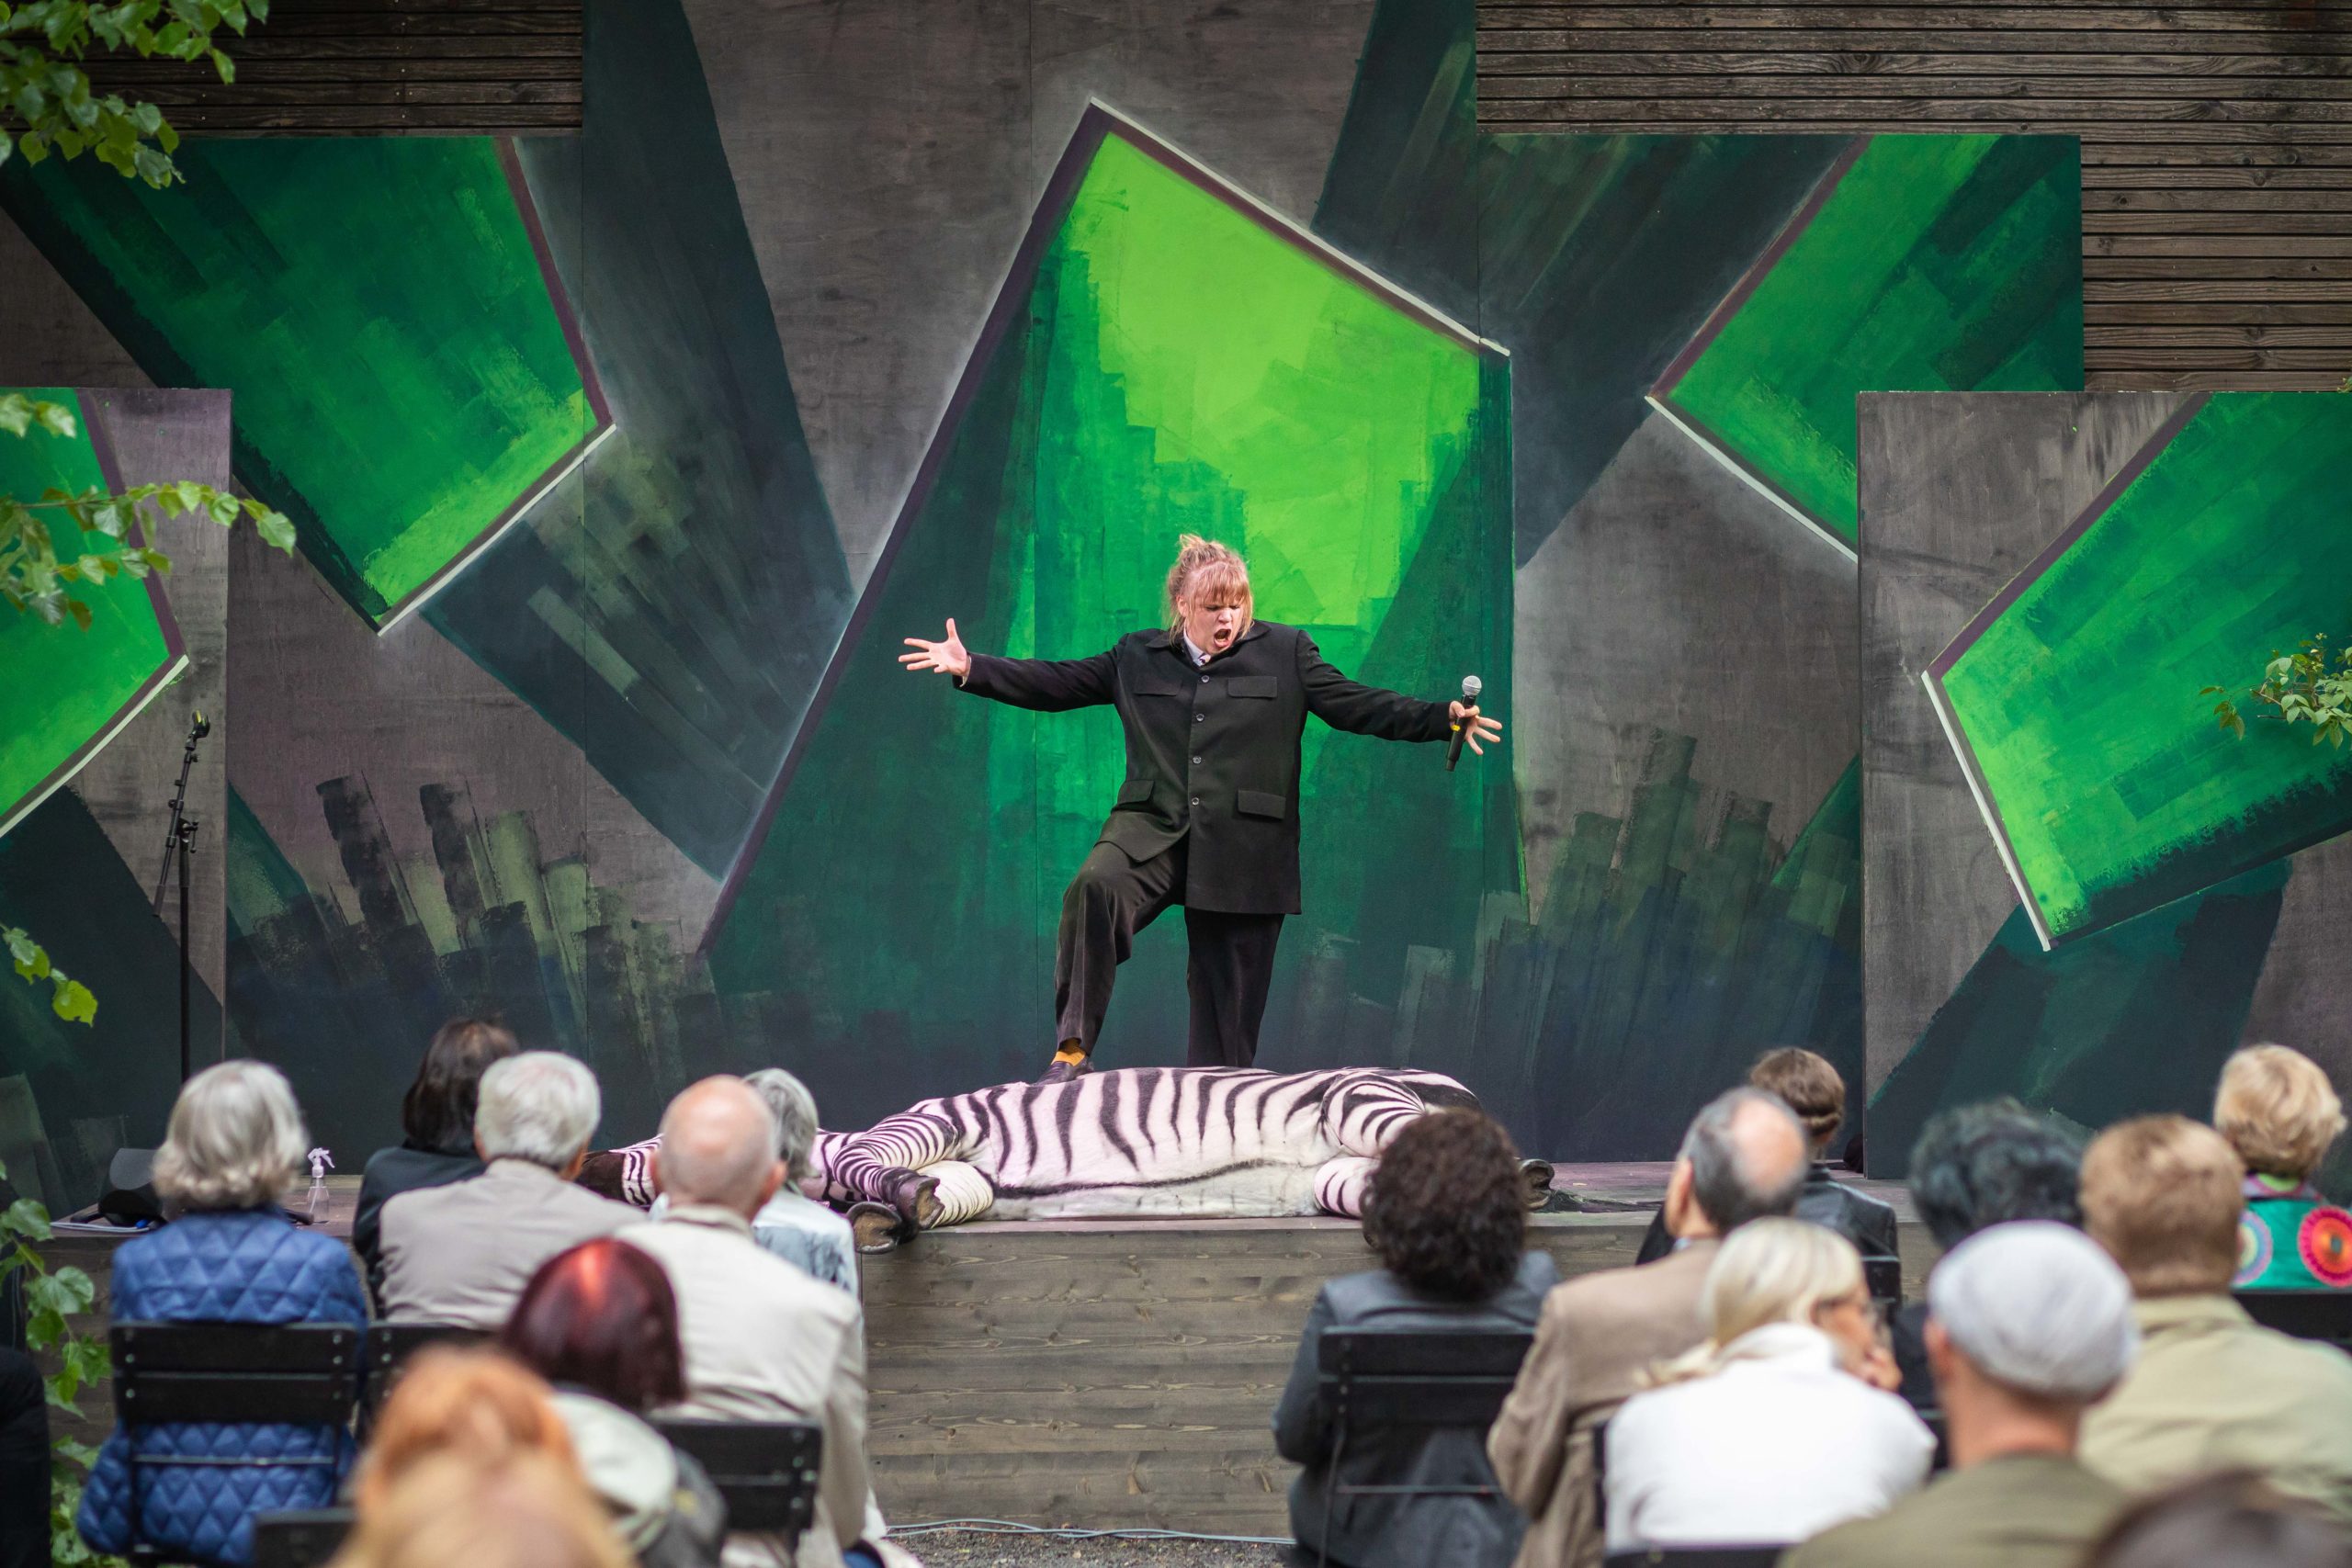 So sah das Open-Air-Theater am Berliner Ensemble 2020 aus. Im Bild: Stefanie Reinsperger in Ersan Mondtags Brecht-Inszenierung "Baal". Foto: Moritz Haase